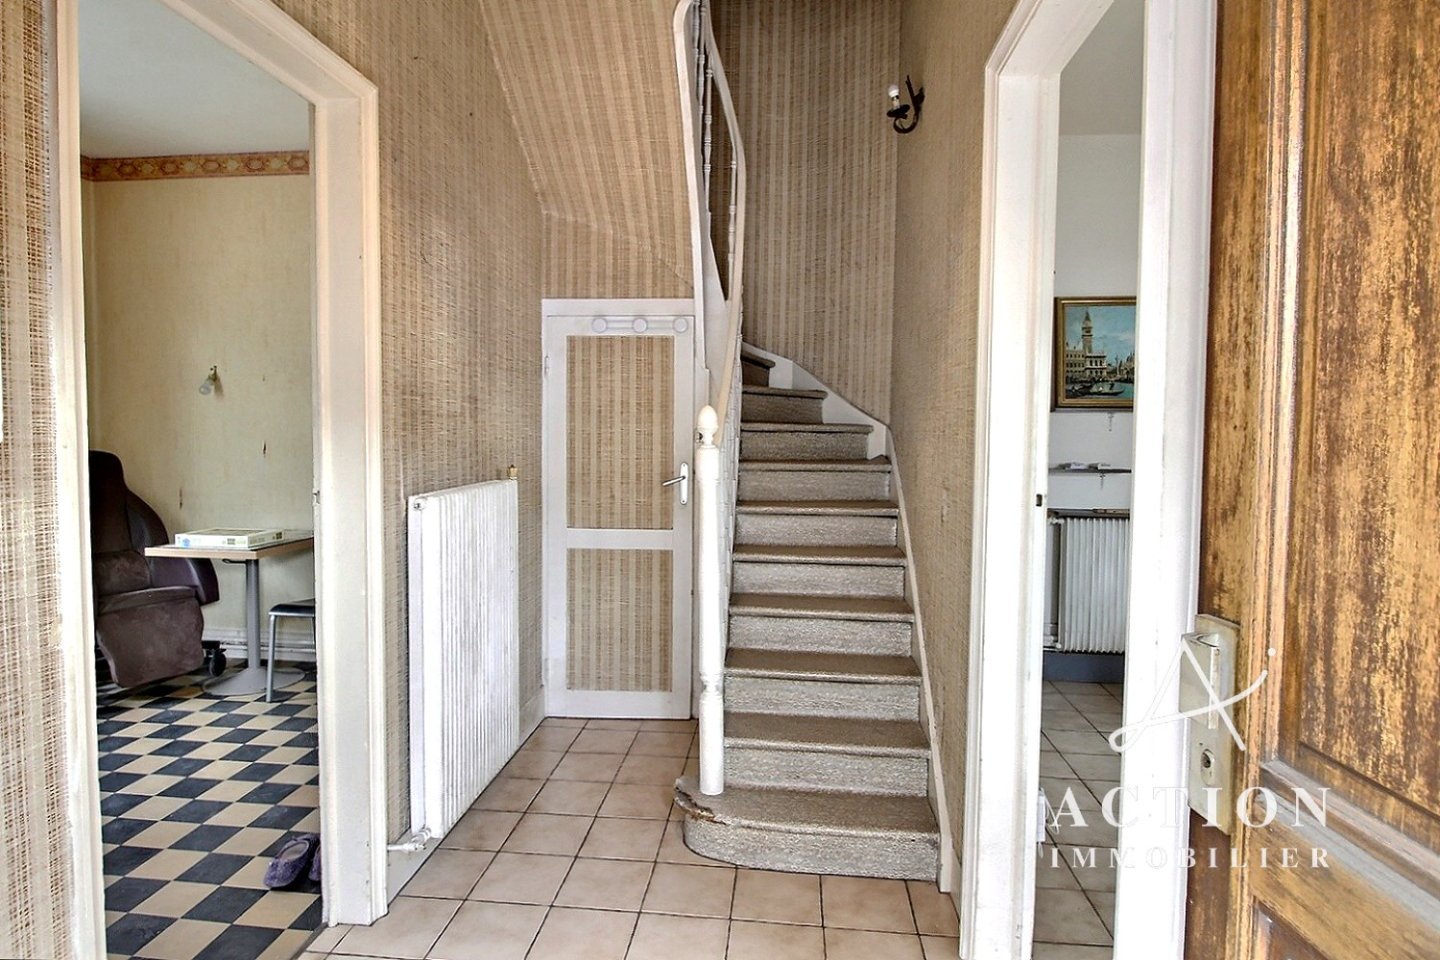 Maison 3 Chambres; jardin, garage A VENDRE - LOOS - 96 m2 - 190 355 €